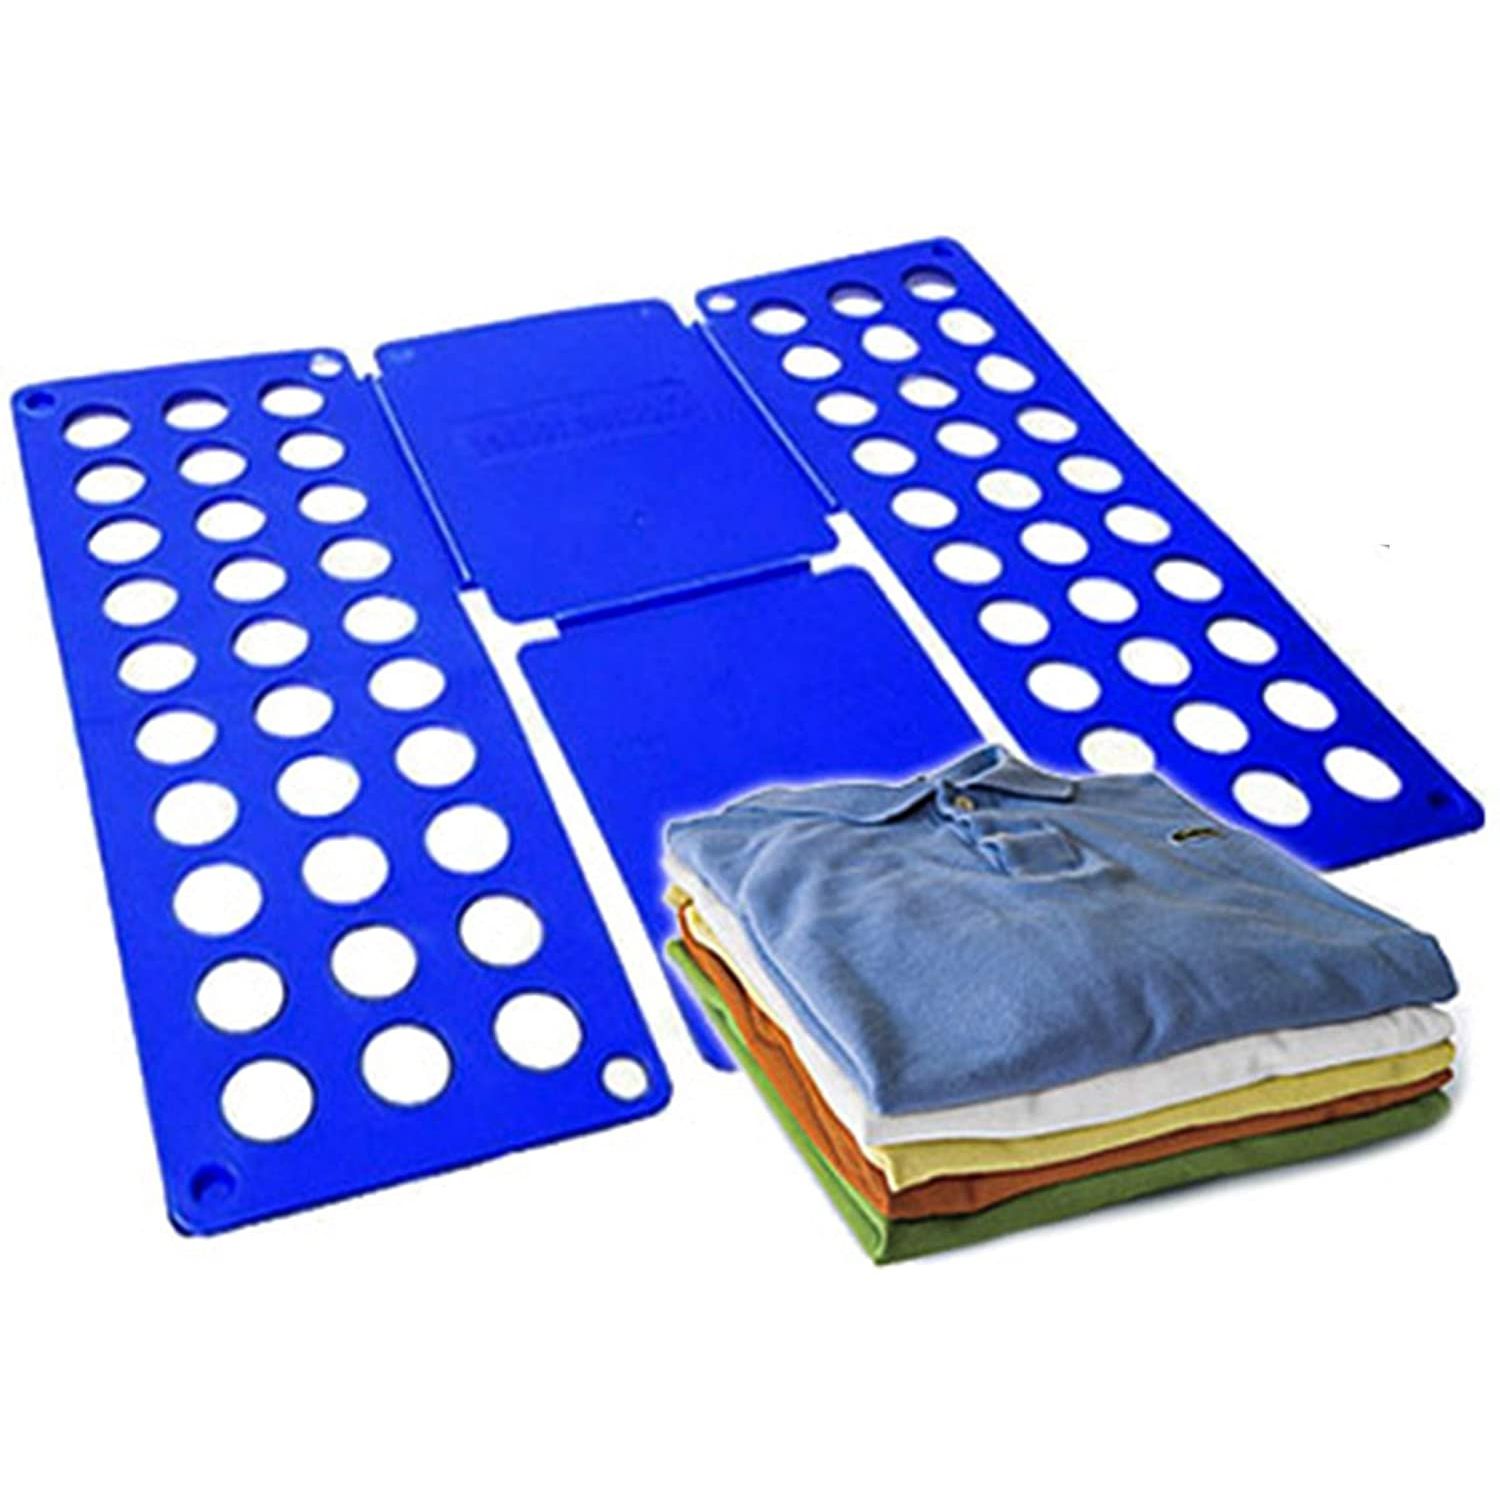 Tabla plegable para doblar ropa 60 x 70 cm - Shopmami